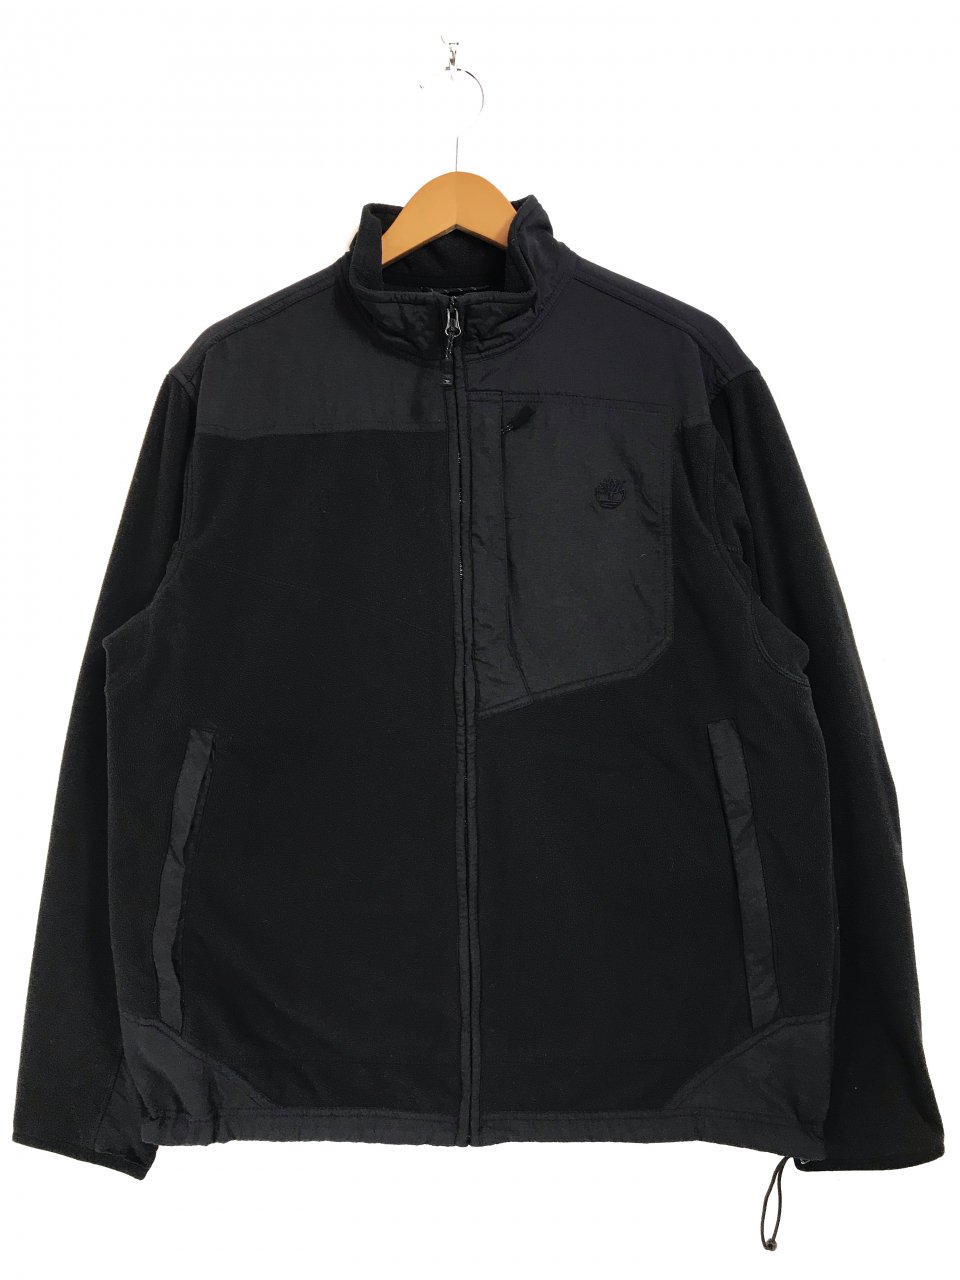 Timberland Full-Zip Fleece Jacket 黒 XL ティンバーランド ...